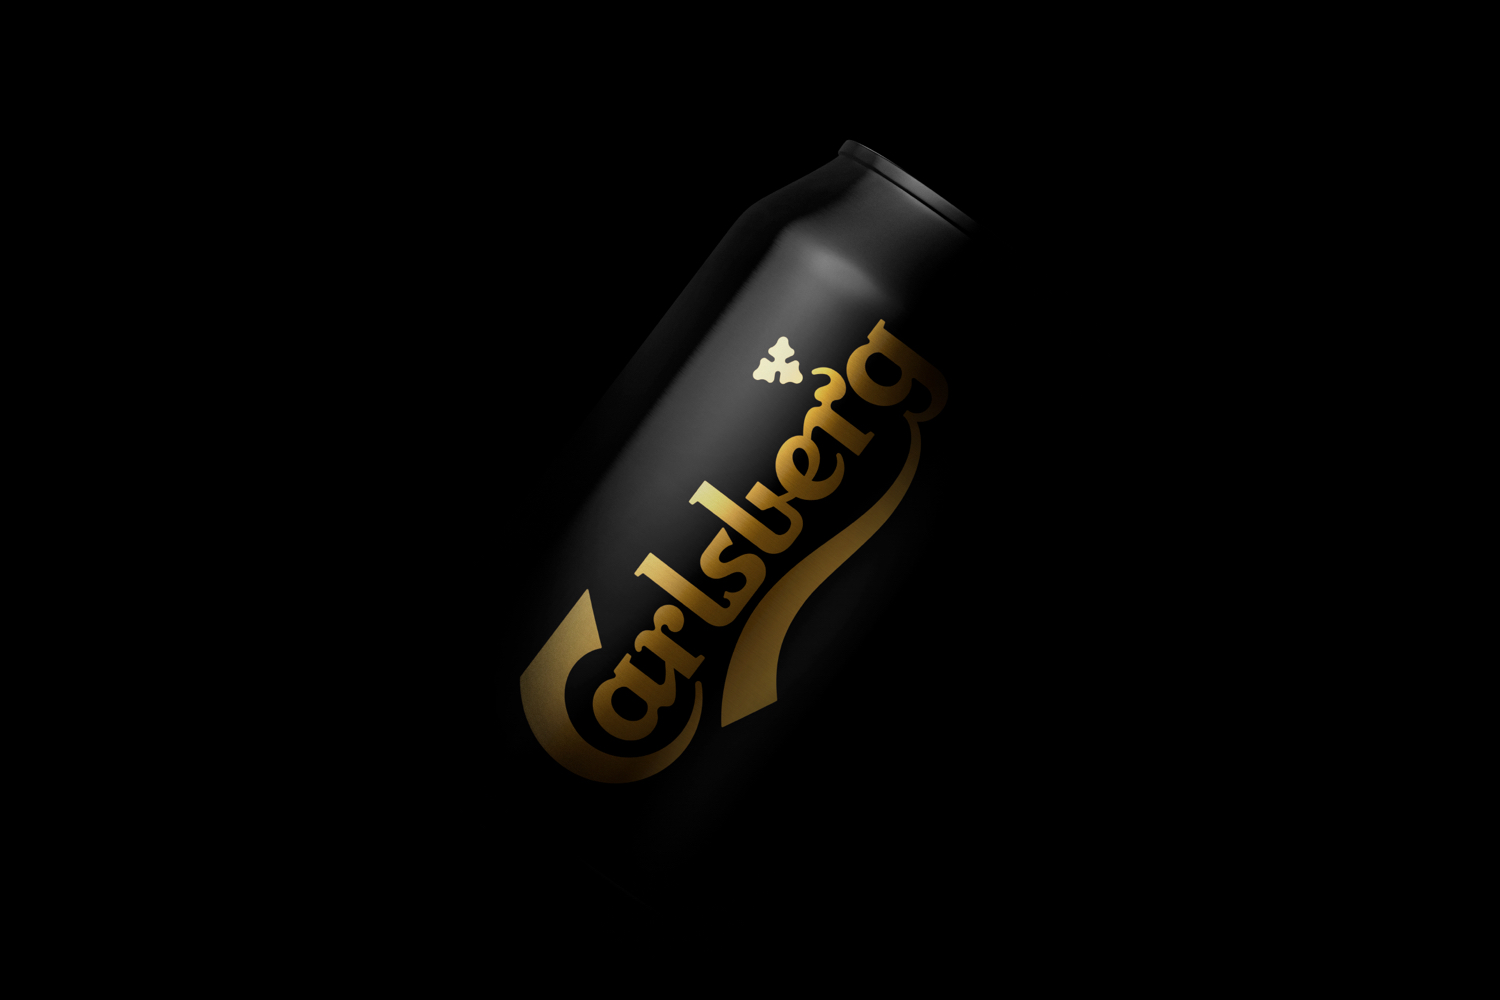 New minimal package design by Danish studio Kontrapunkt for Carlsberg's Black Gold